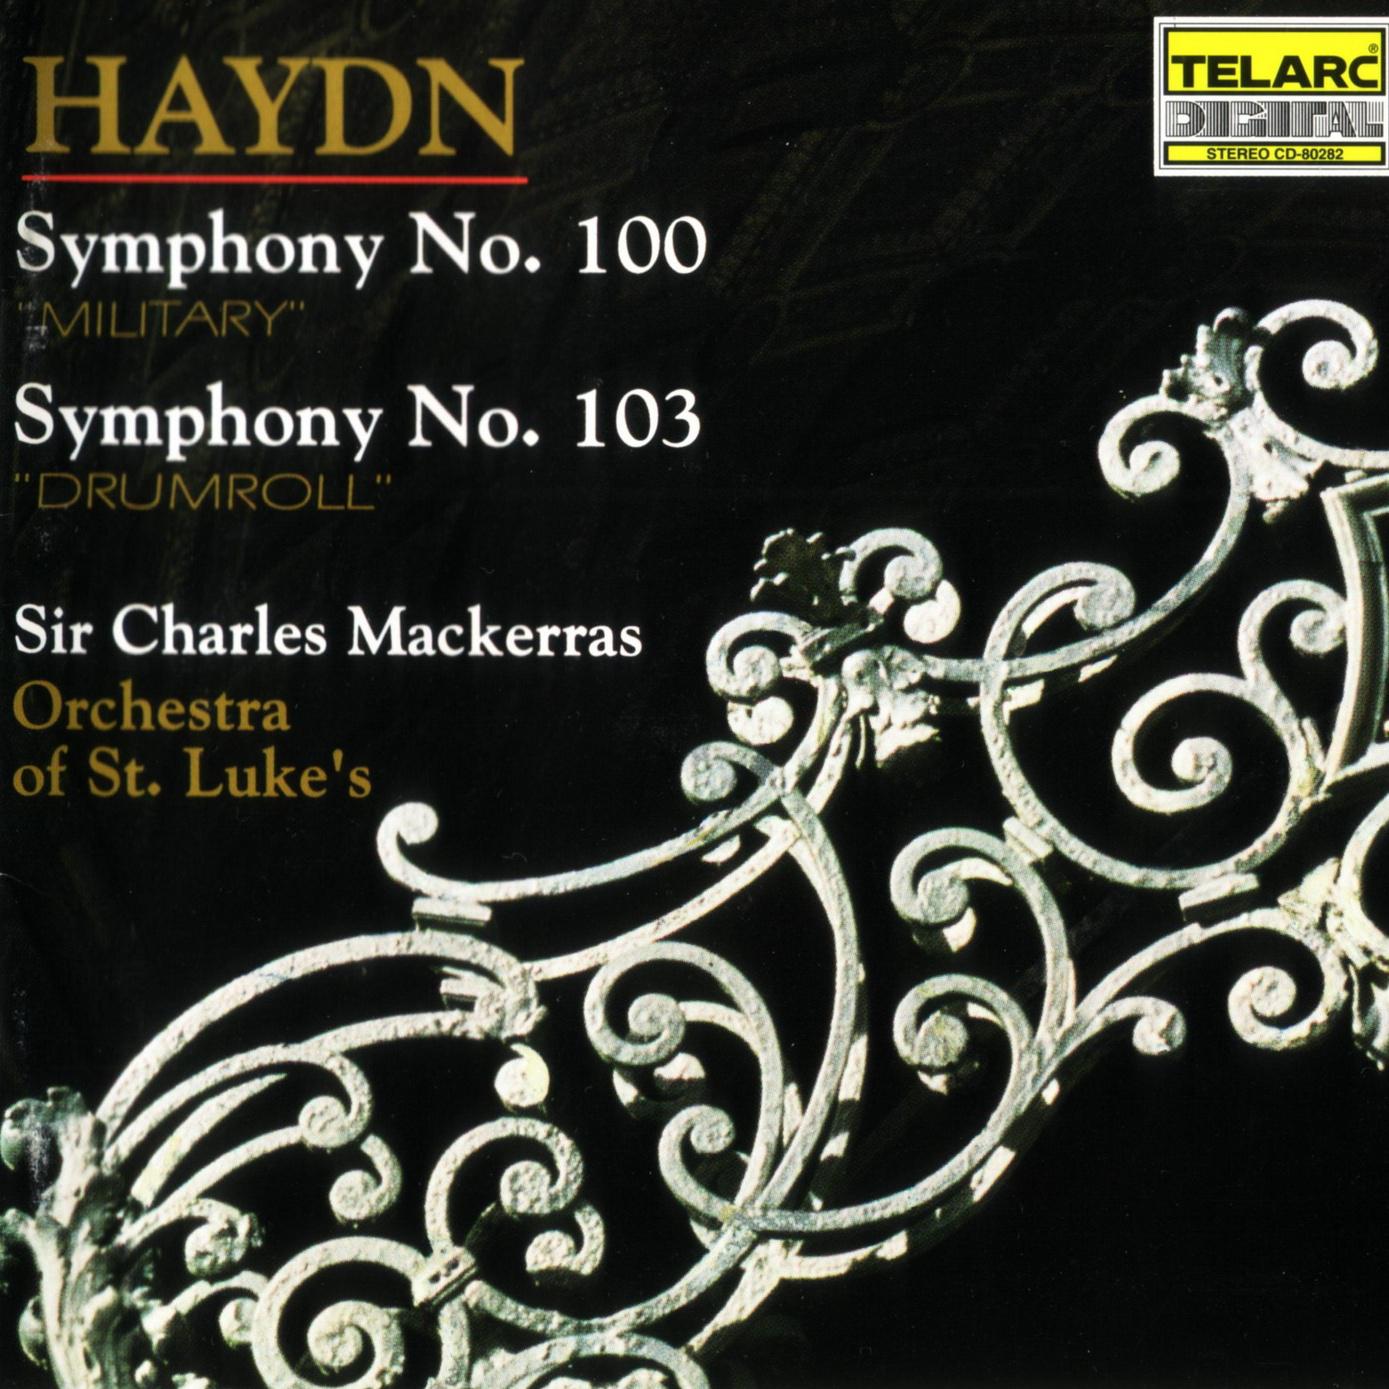 F. J. Haydn - Symphony No. 100 'Military' - I. Adagio: Allegro